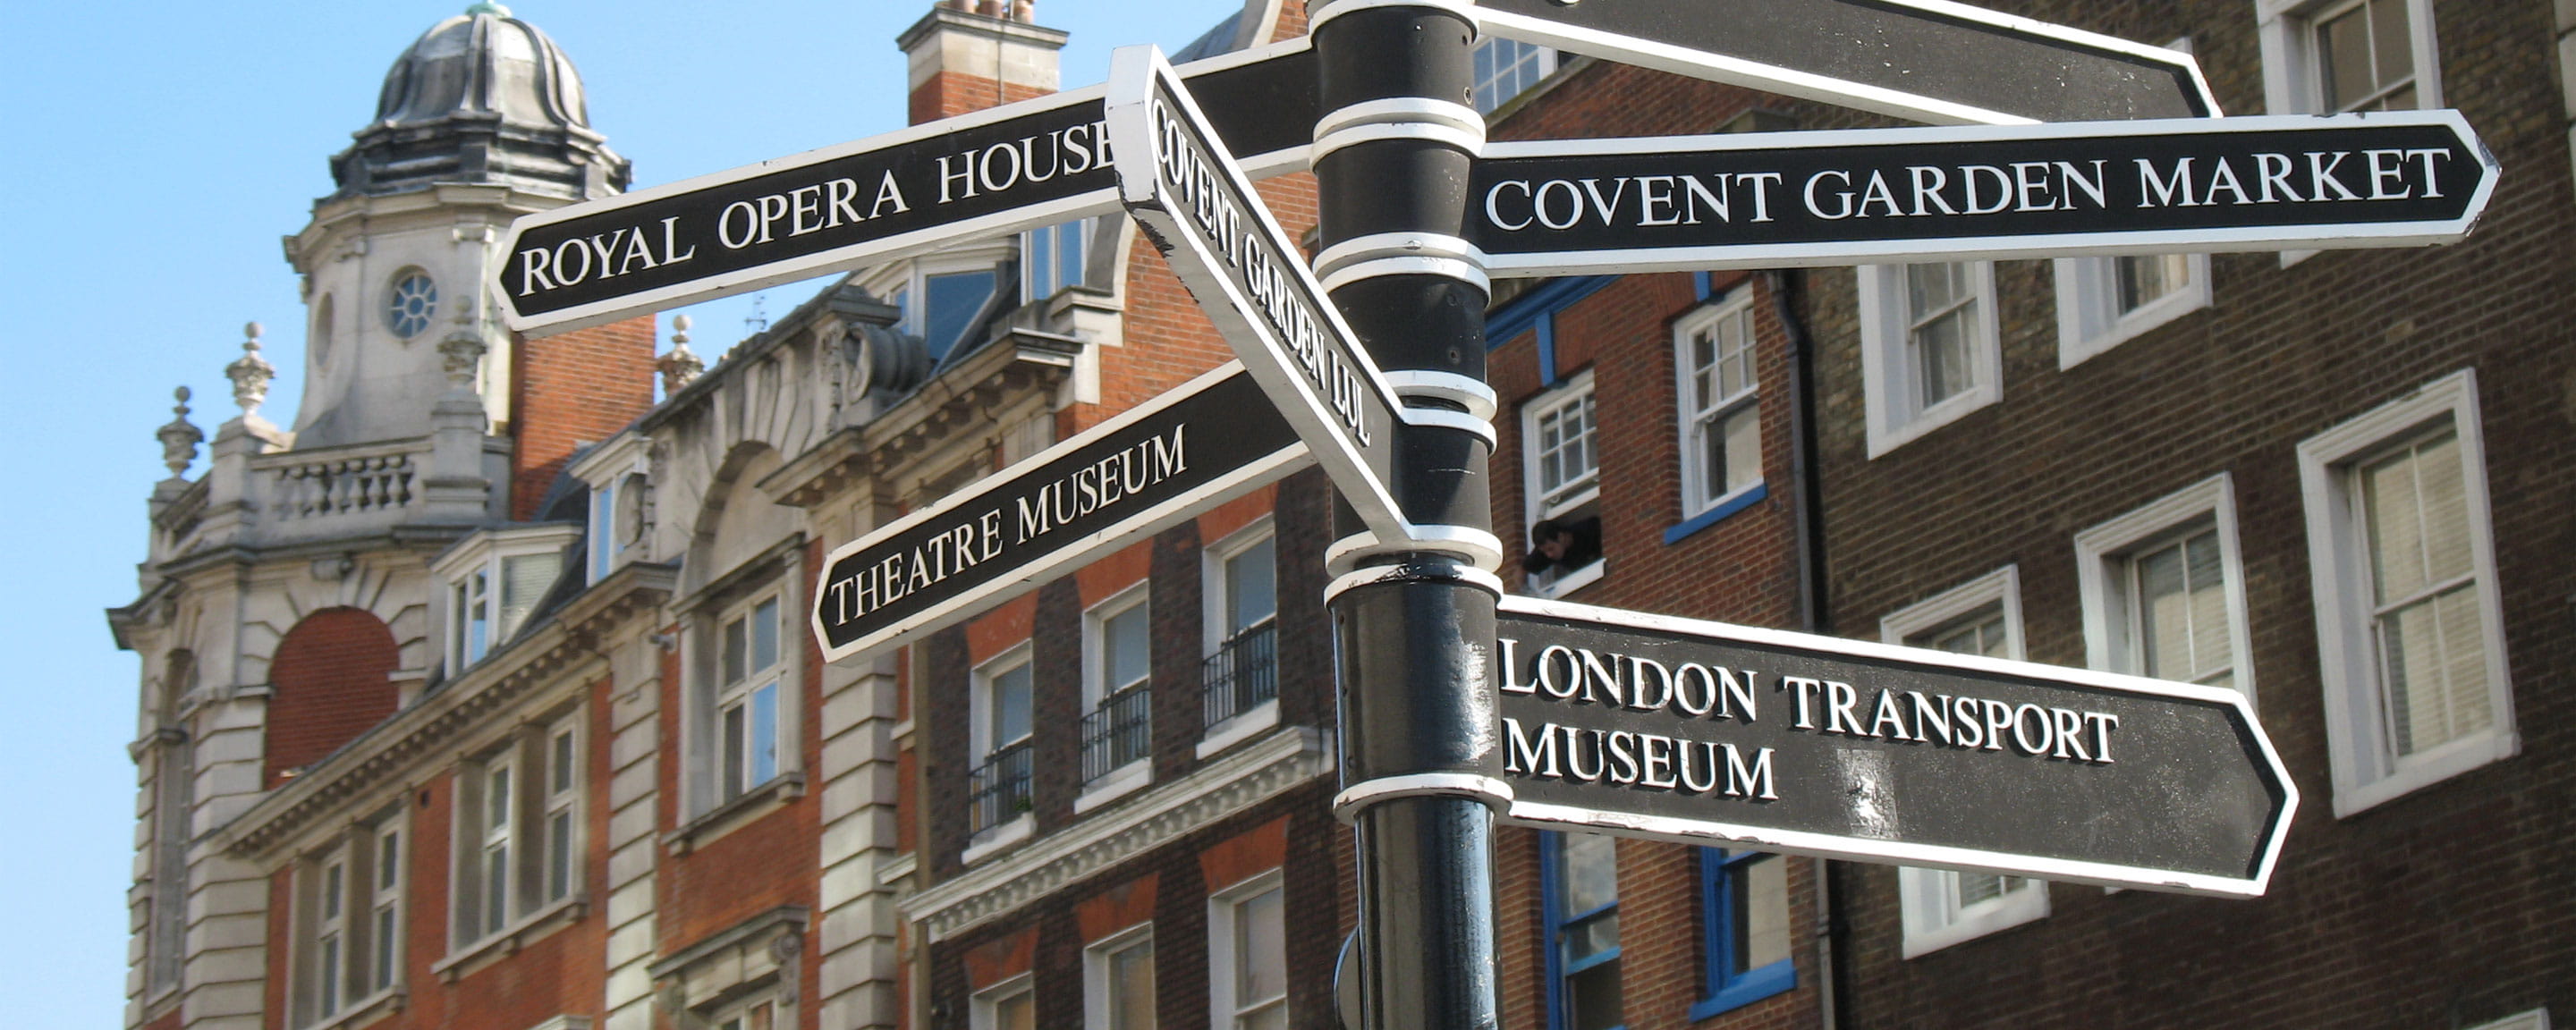 Covent Garden street sign